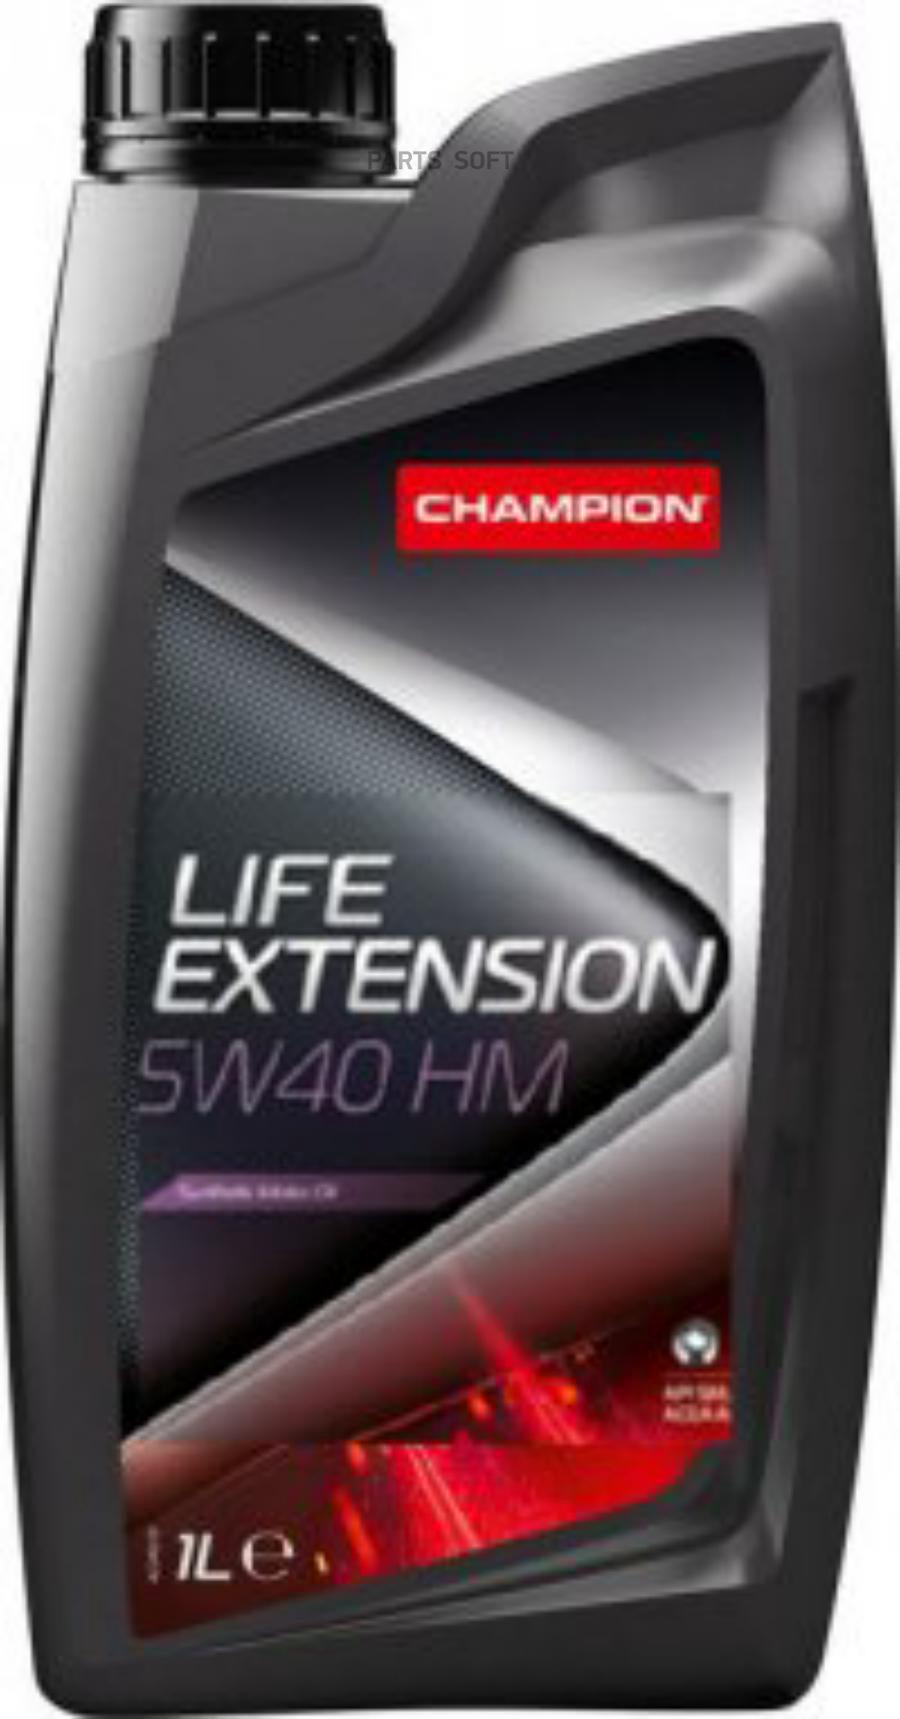 Масло Мот. Champion Life Extension 5w40 Hm, Acea: A3/B4-16, Api: Sn/Cf (1л) Синт. CHAMPION